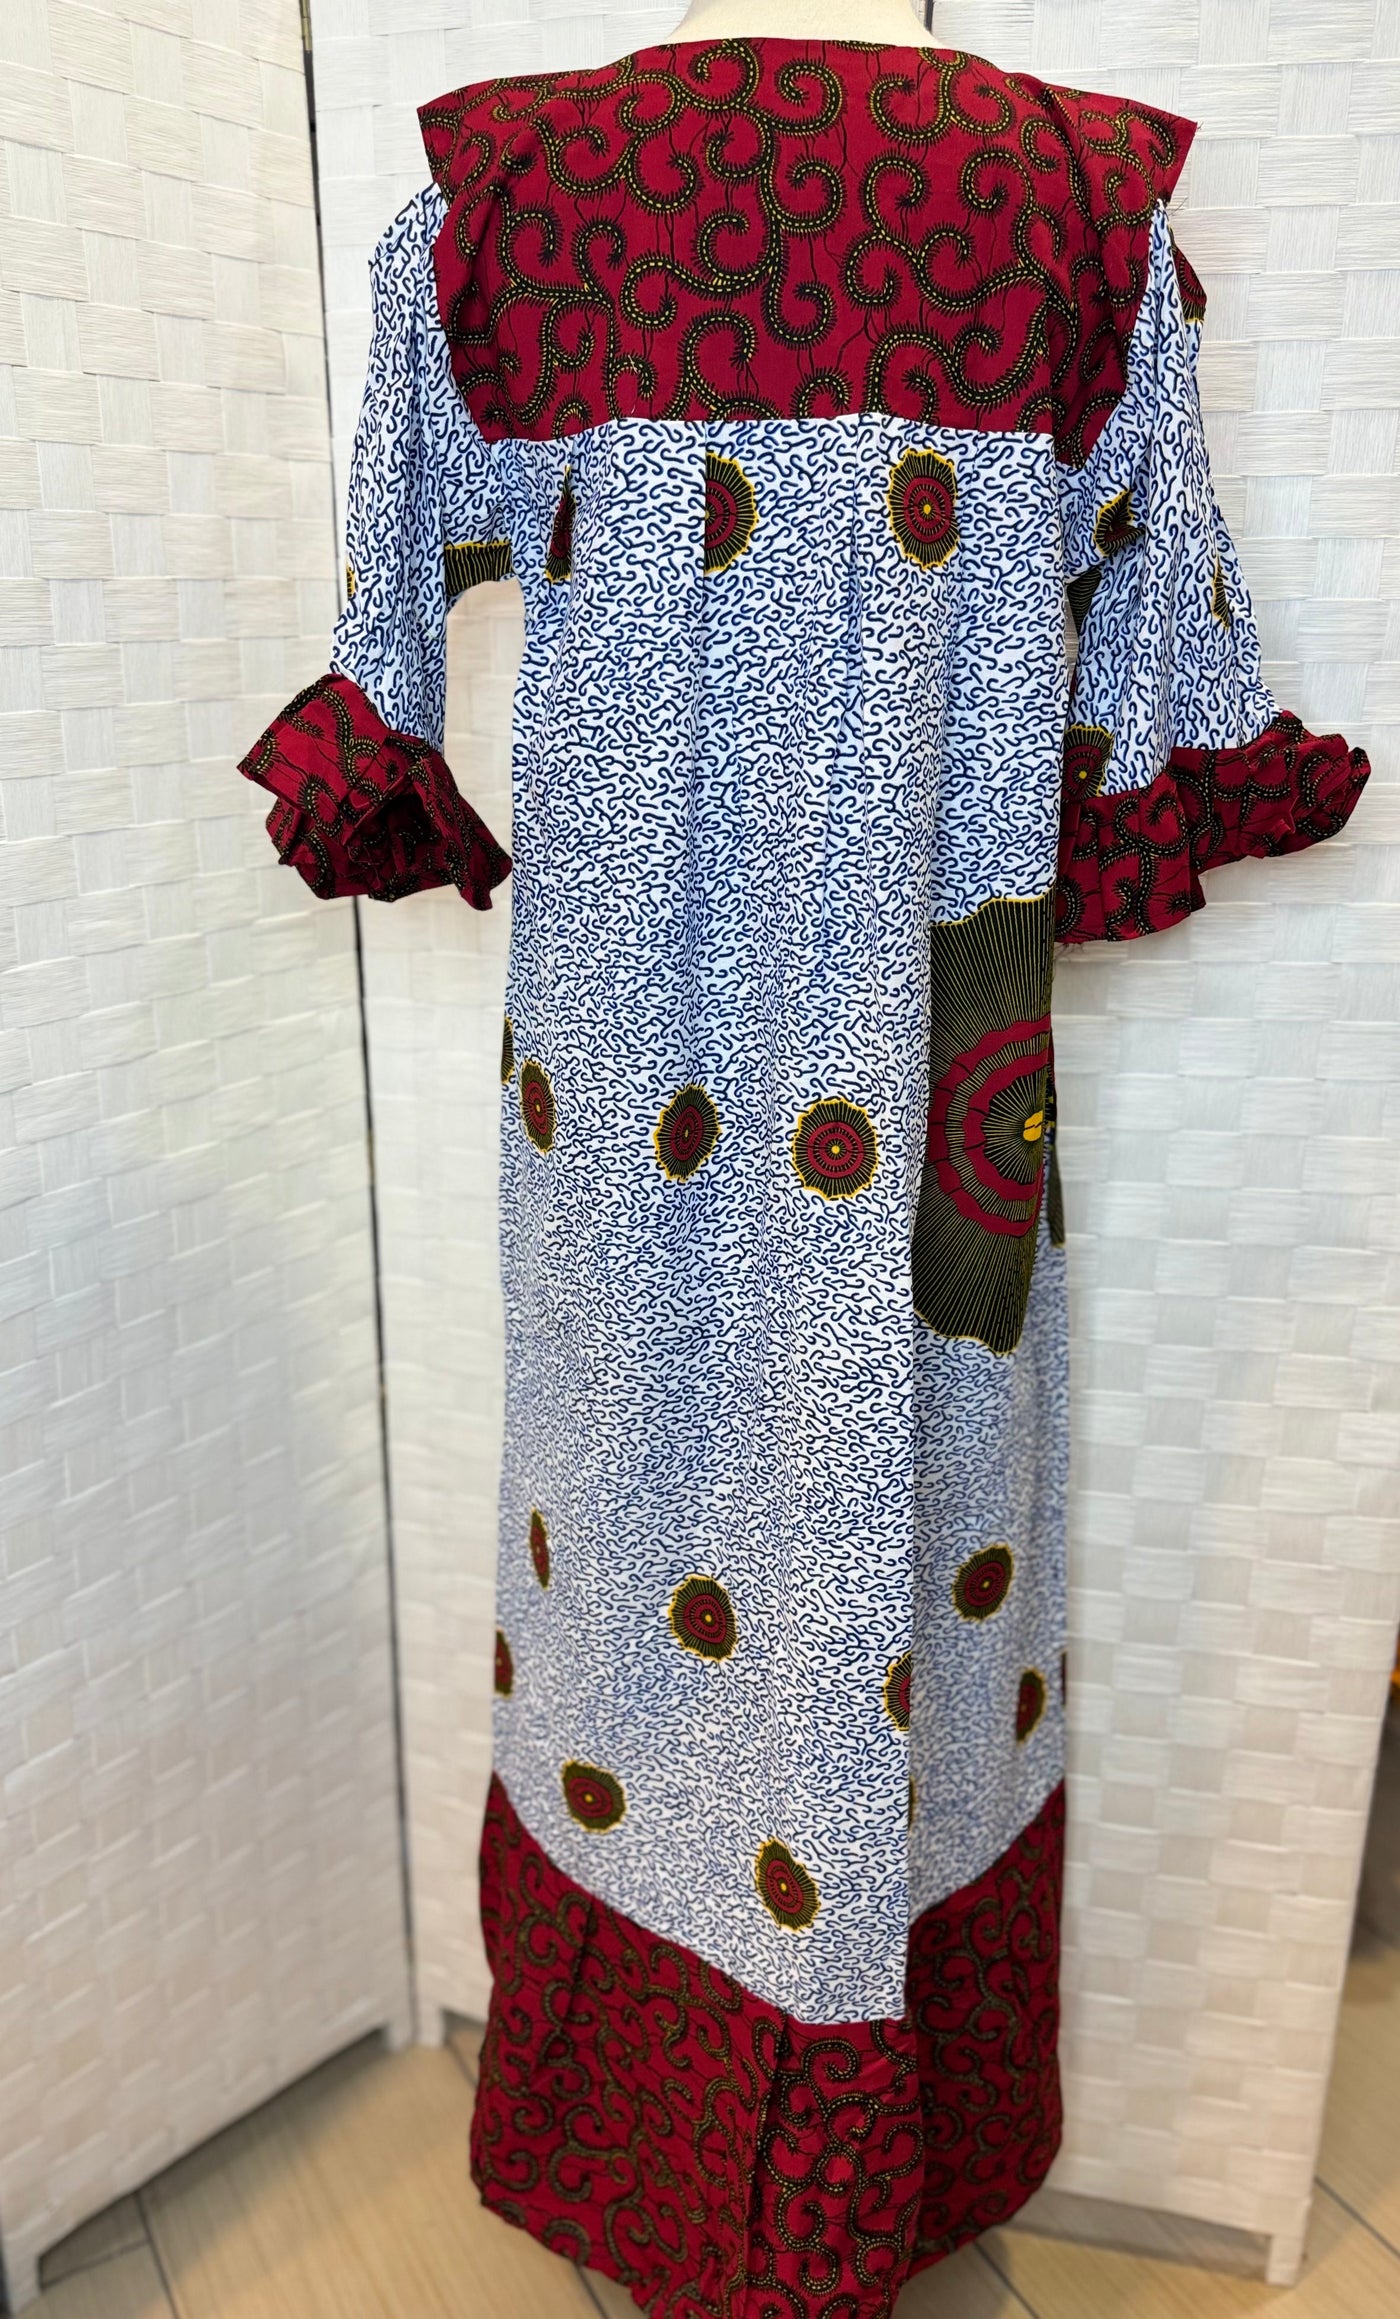 Ivory Coast’s Dresses (Wholesale)